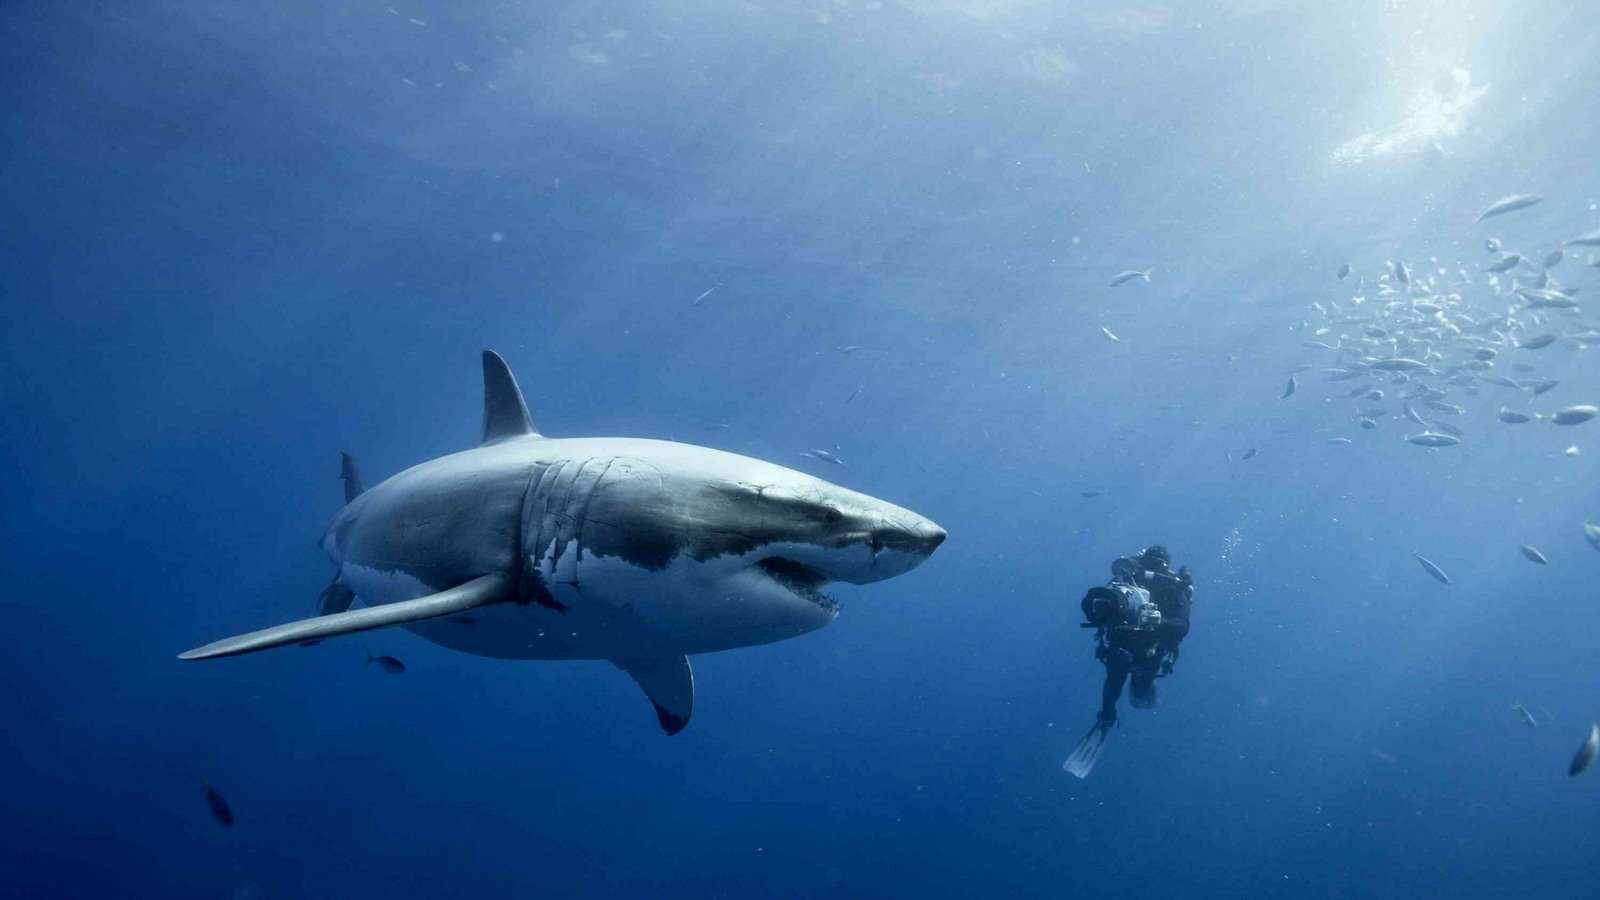 Распространённые мифы об акулах